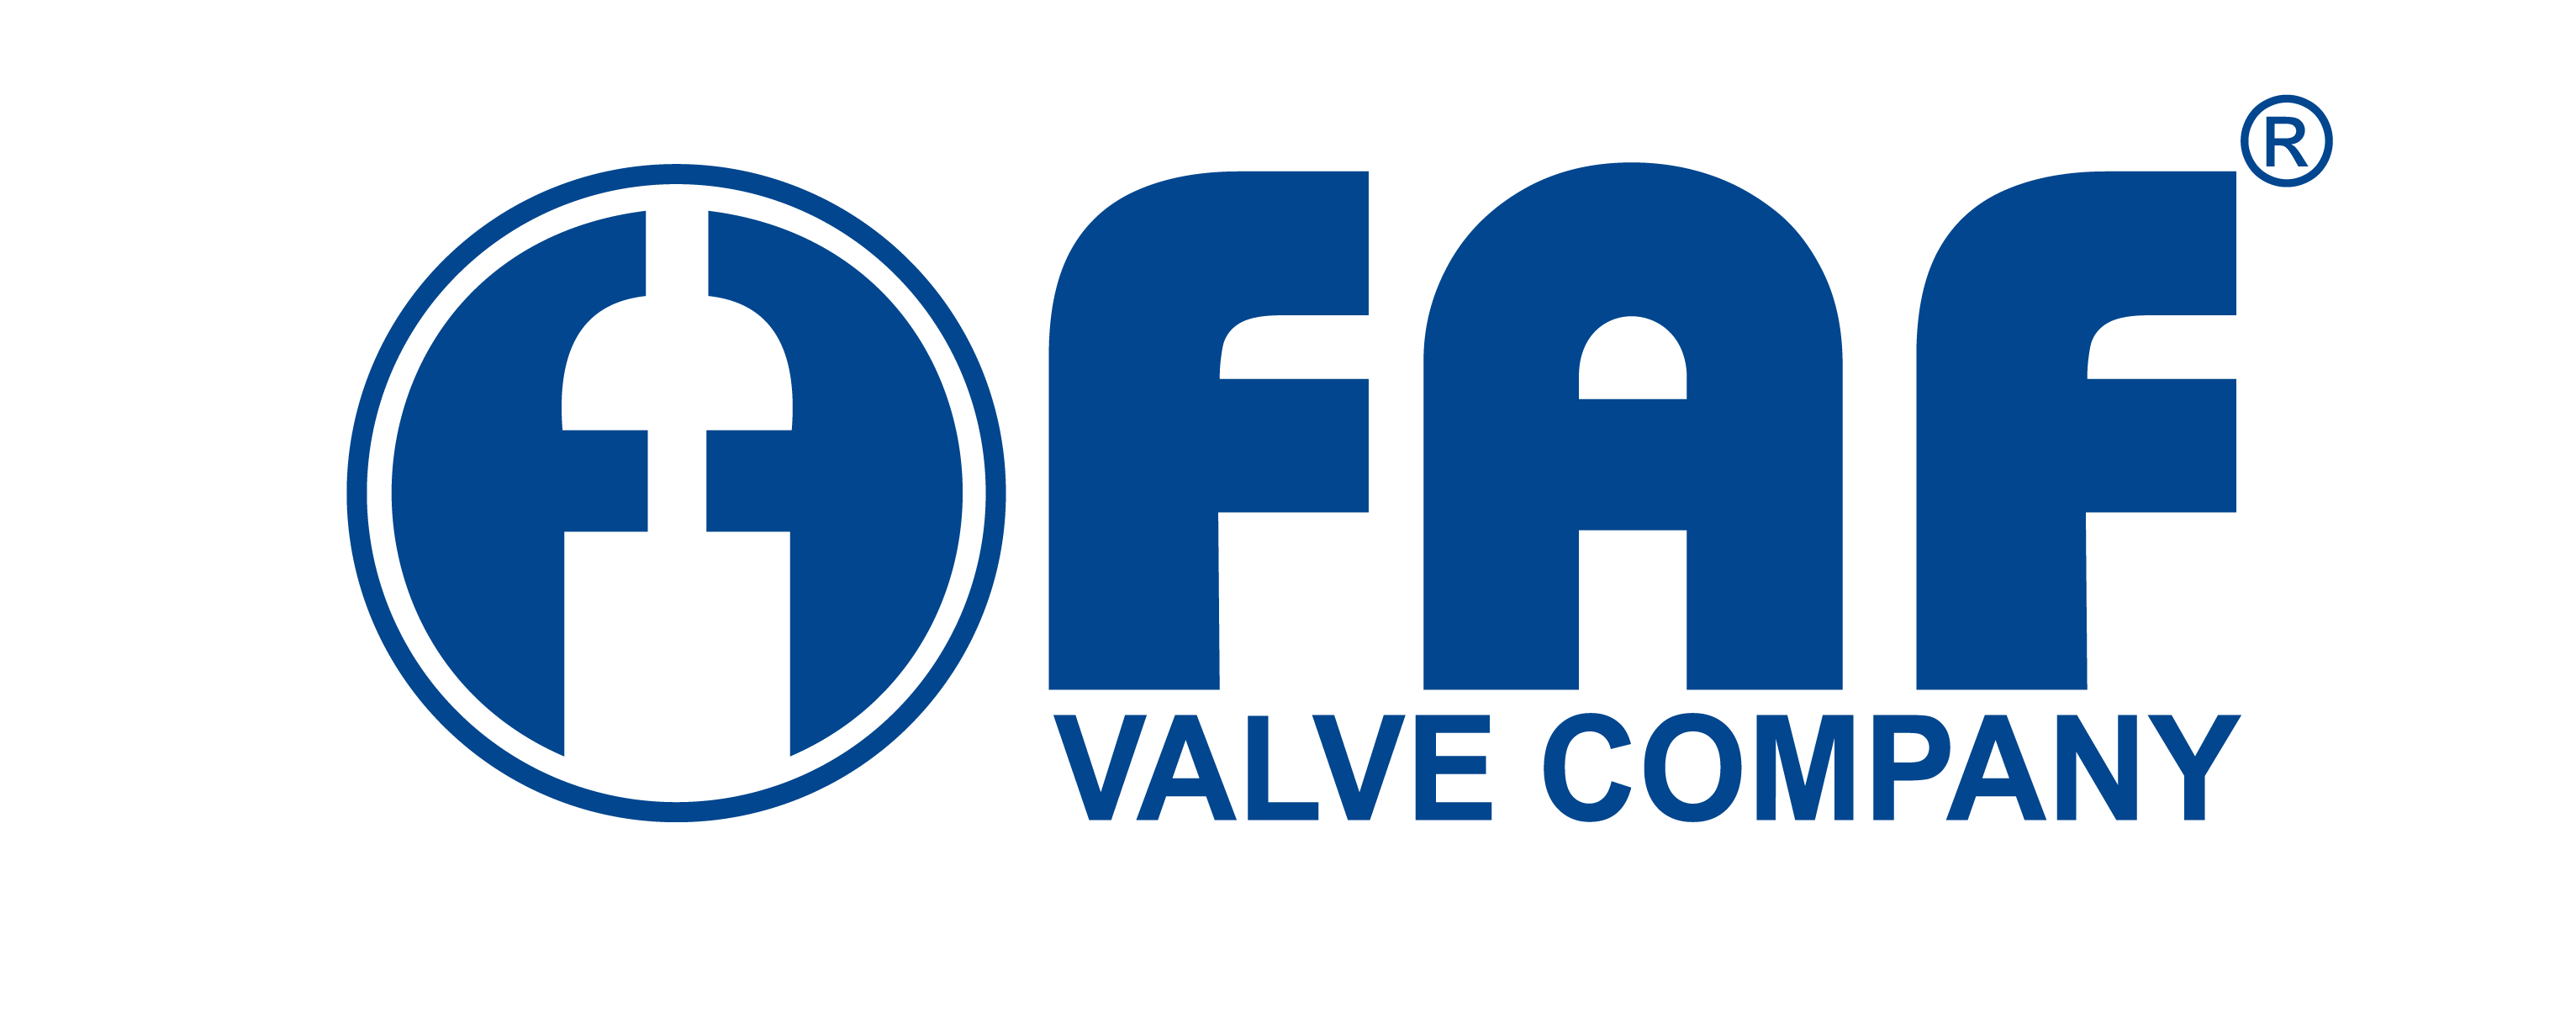 Логотип фирм производителей трубопроводной арматуры. Фаф вана Санайи логотип. FAF. Запорная арматура фаф.